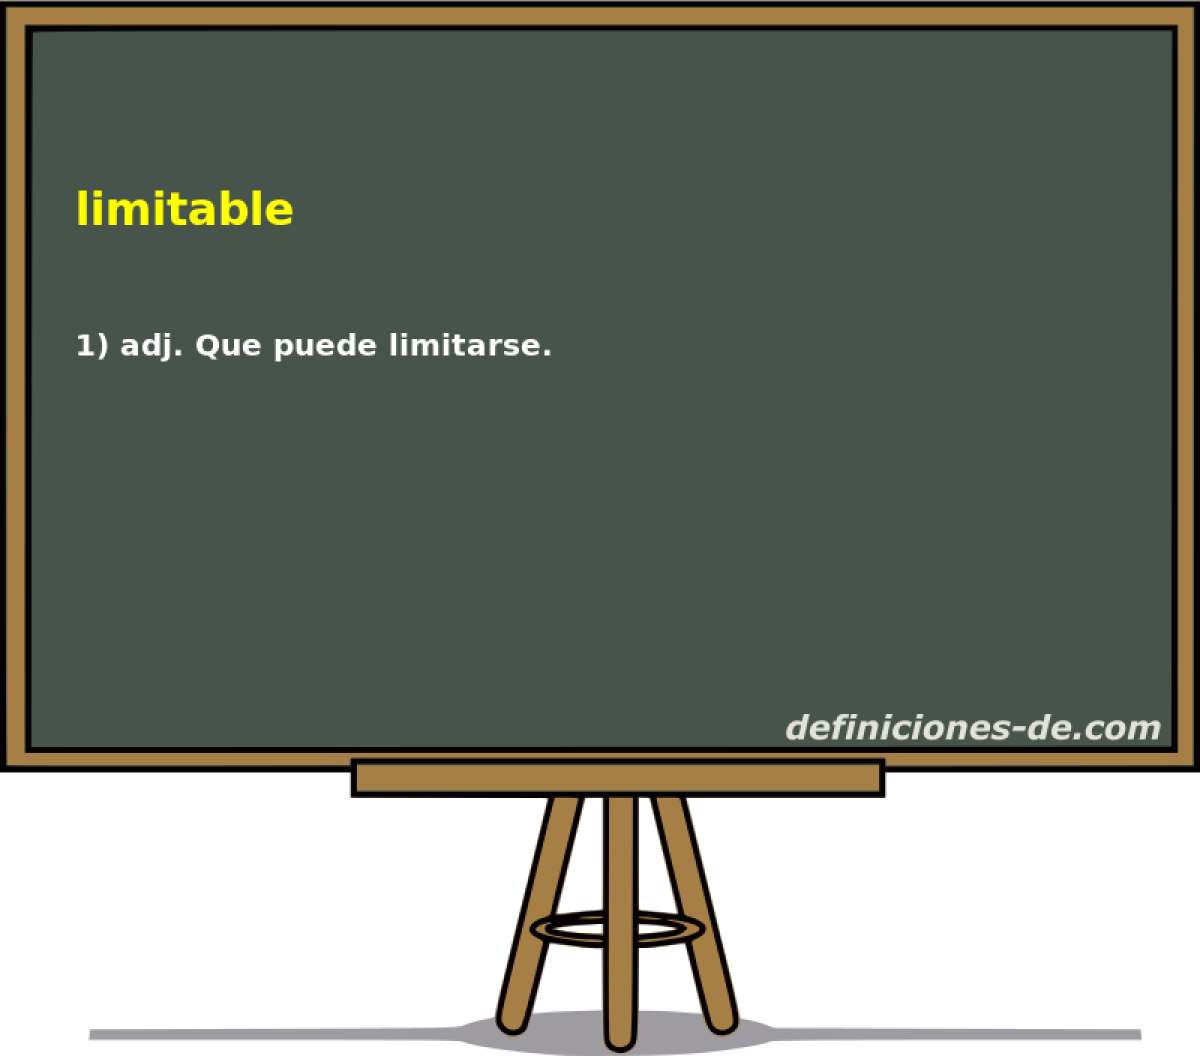 limitable 